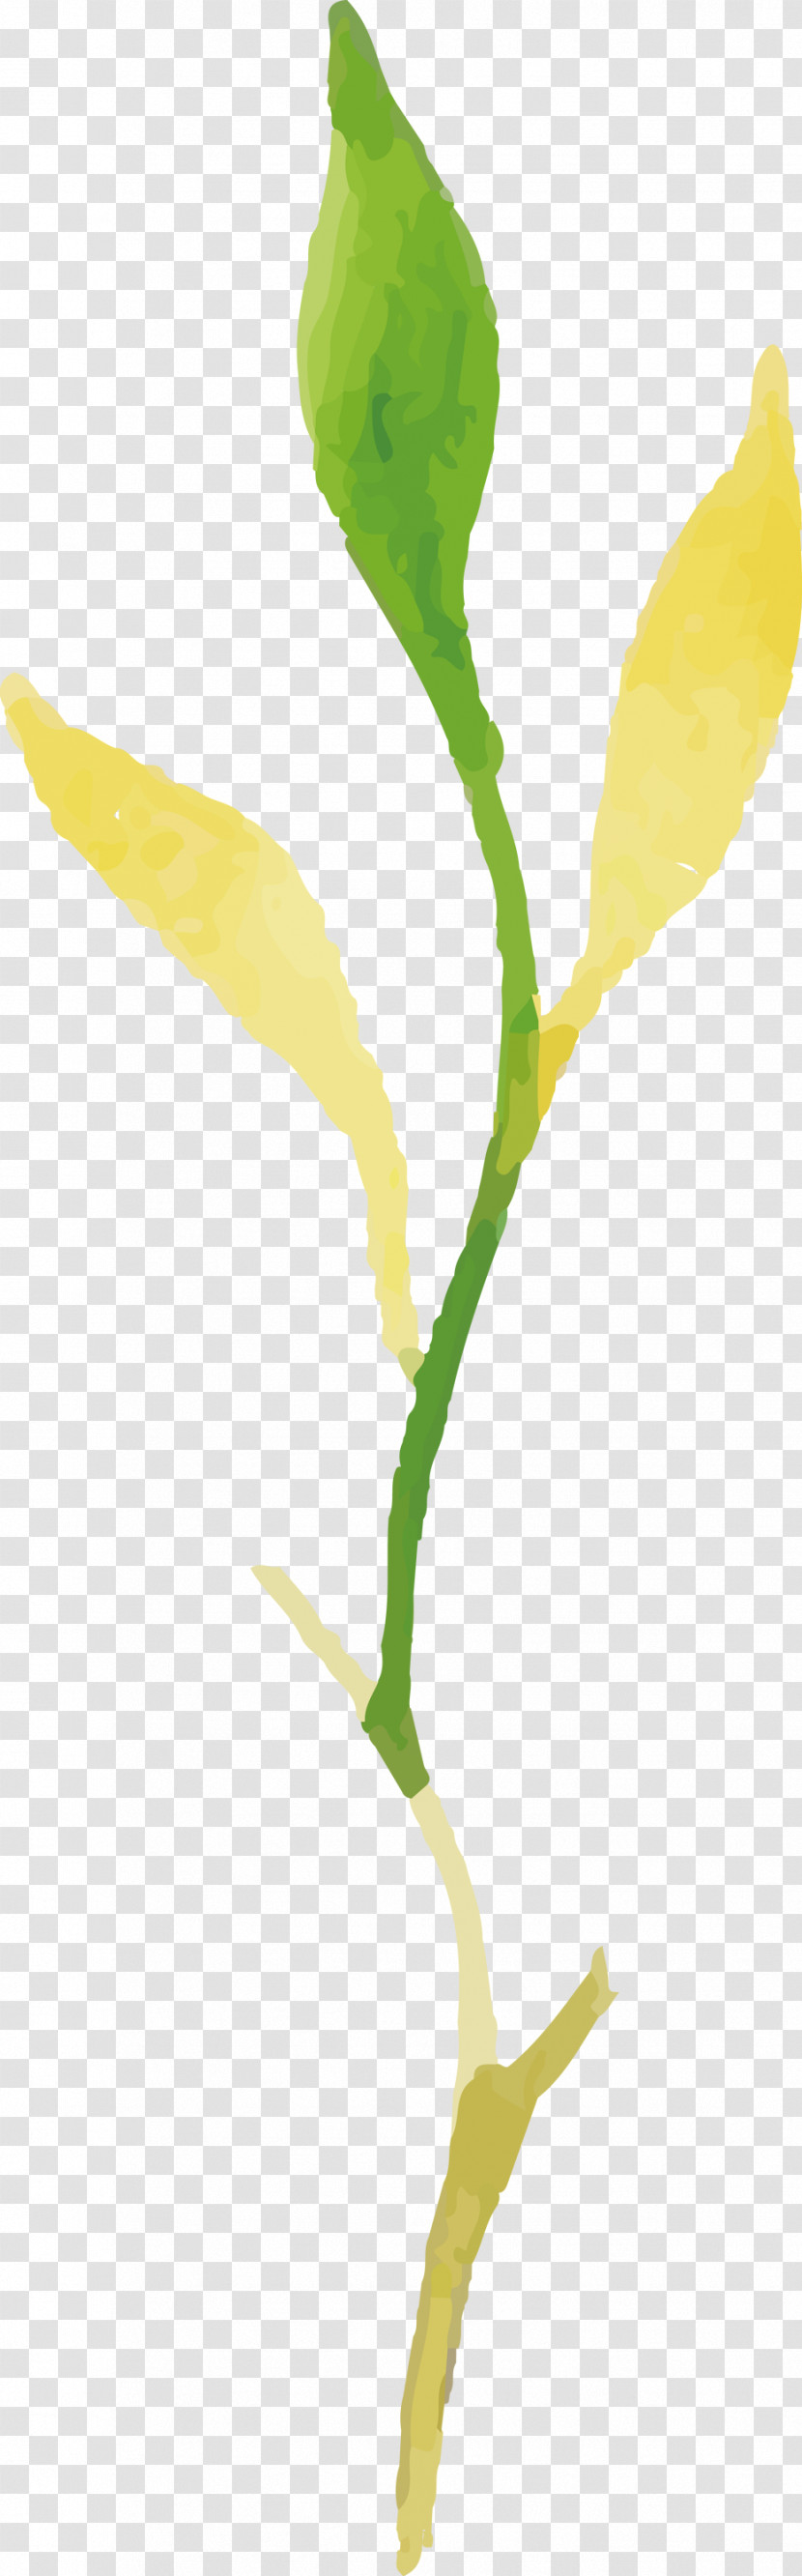 Plant Stem Petal Leaf Twig Yellow Transparent PNG